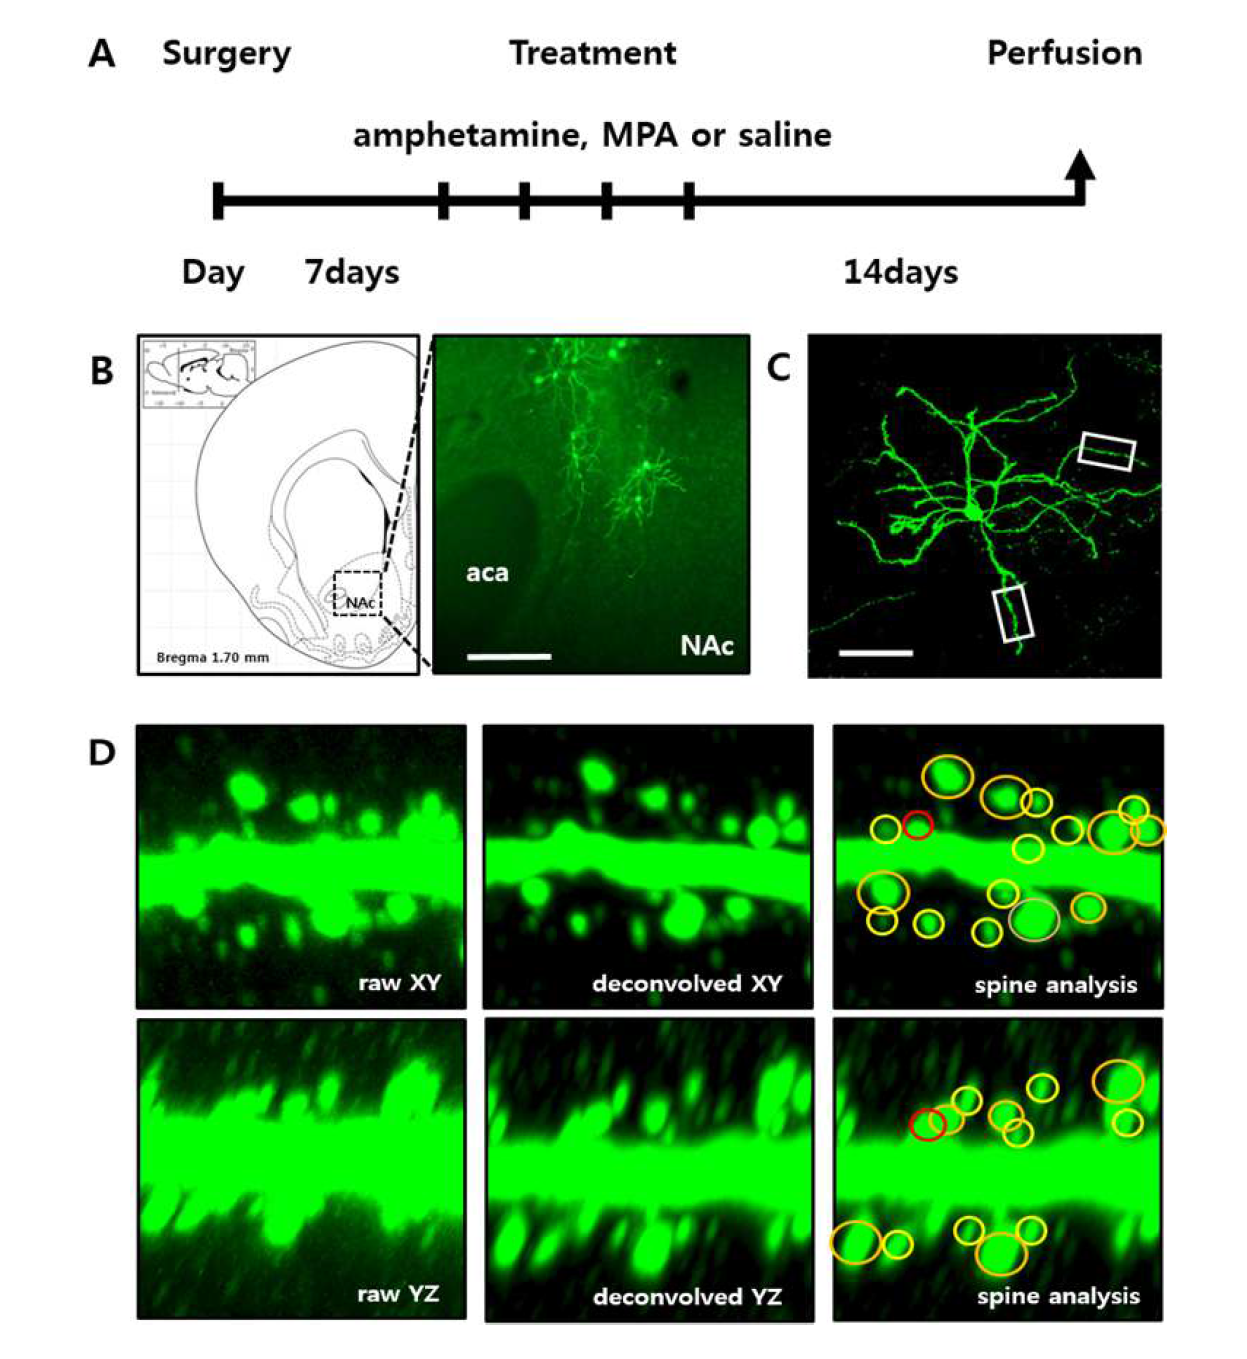 Saline, MPA, amphetamine을 각각 반복적으로 주고 2주 후에 brain을 적출하여 sucrose용액에 담가둔 뒤, nucleus accumbens 조직을 slice 하여 GFP 항체로 염색을 하고, Neuron Studio를 이용하여 dendritic spine의 수와 모양을 분석하였다.